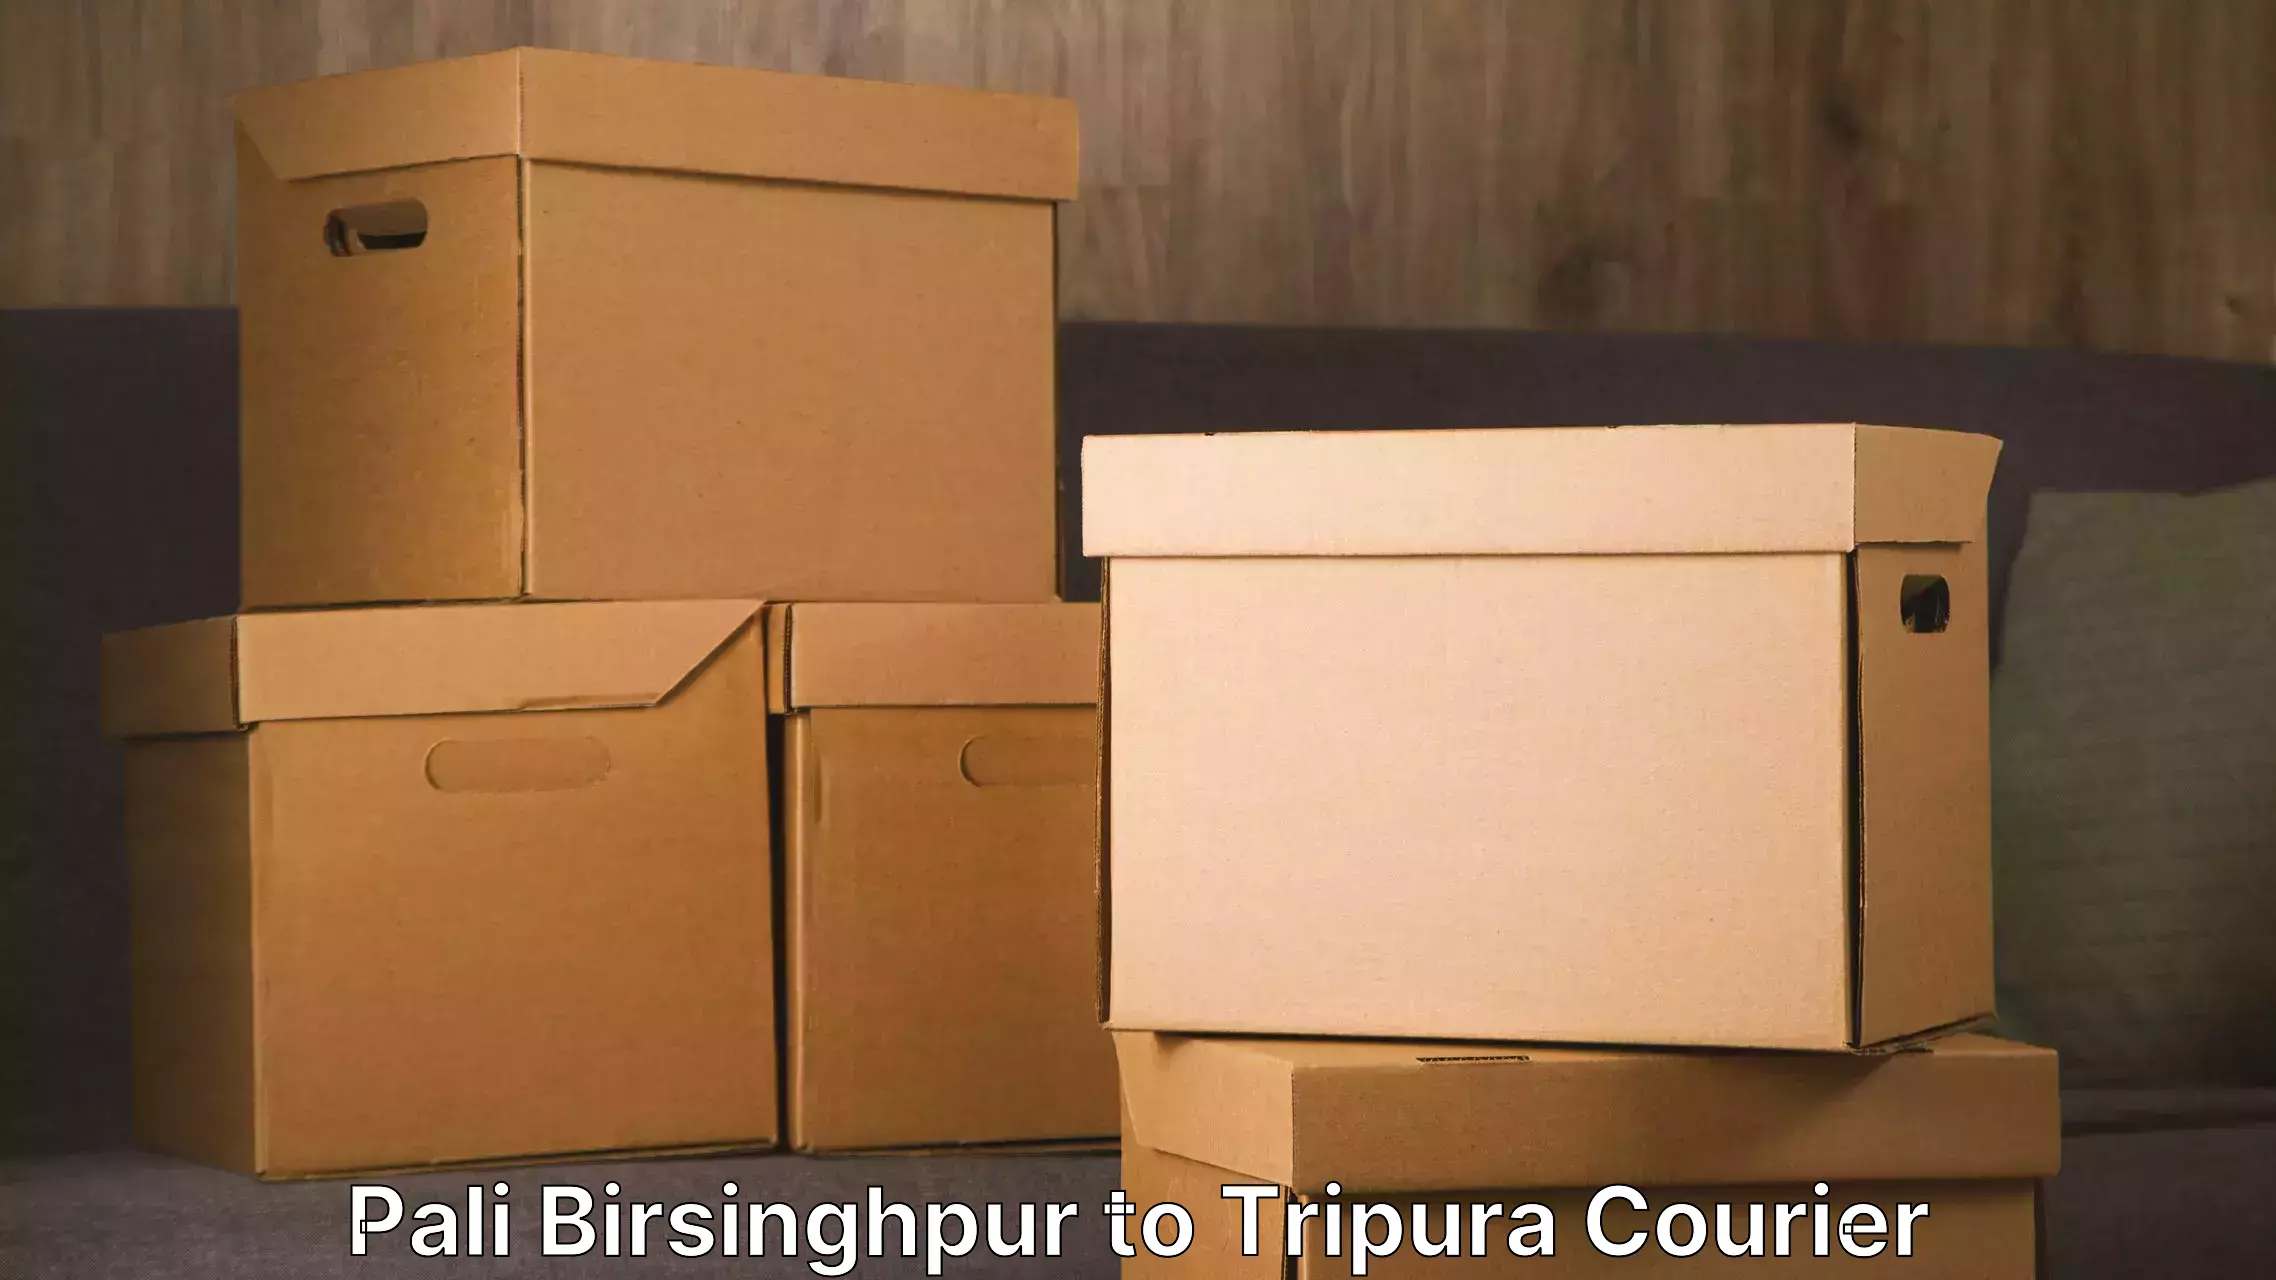 Professional furniture movers Pali Birsinghpur to Udaipur Tripura